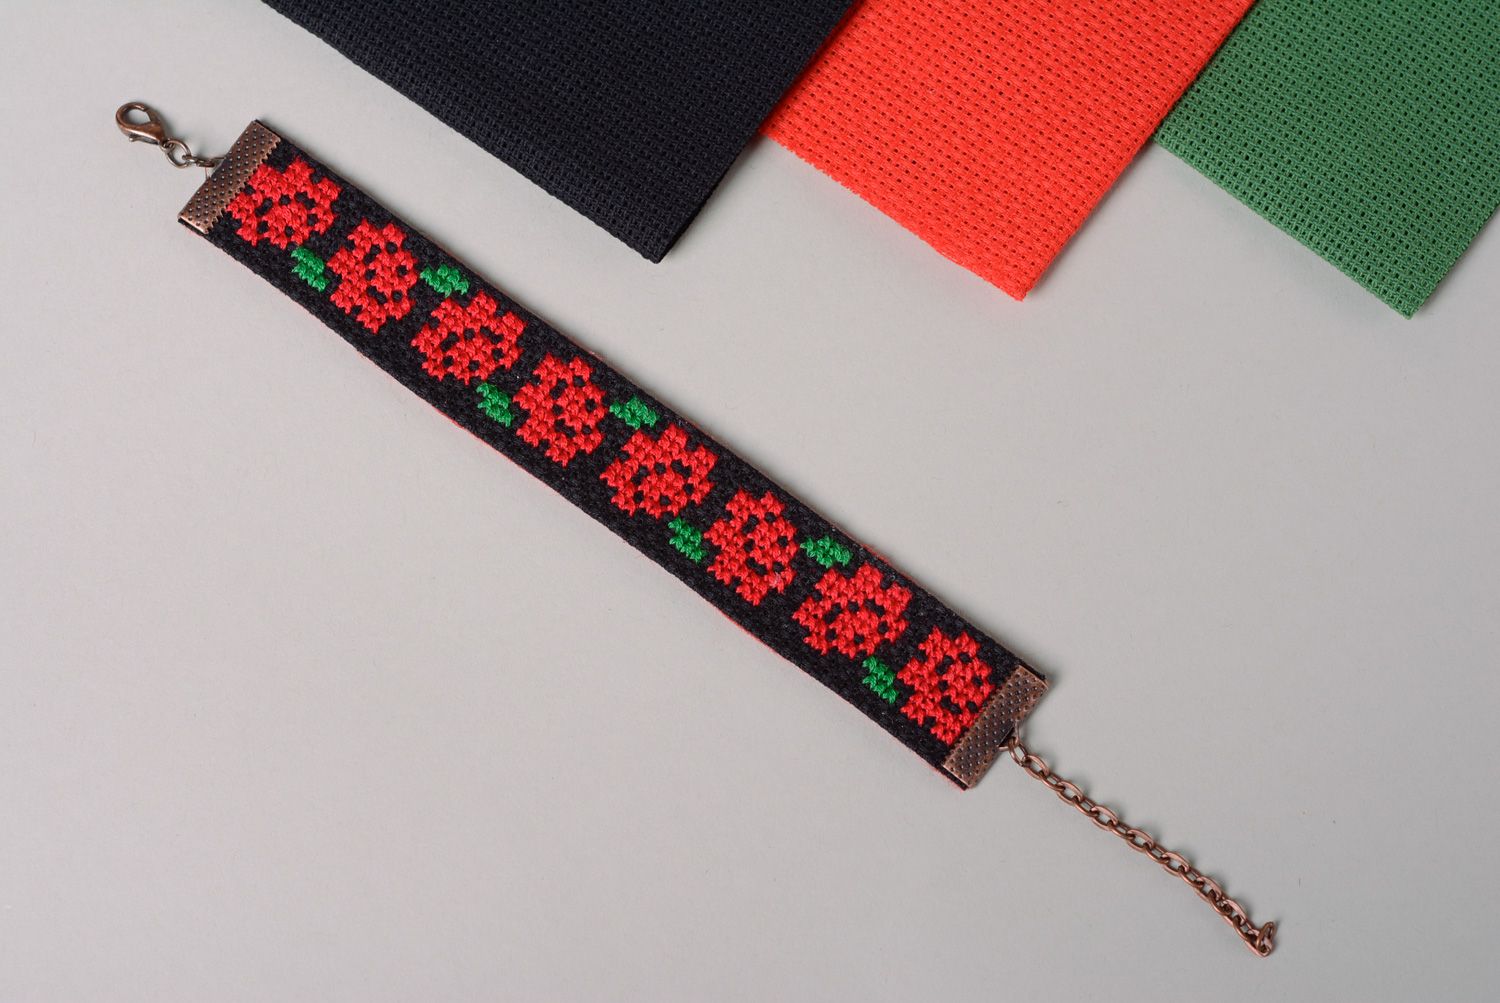 Black wrist bracelet with handmade contrast ethnic cross stitch embroidery for women photo 1